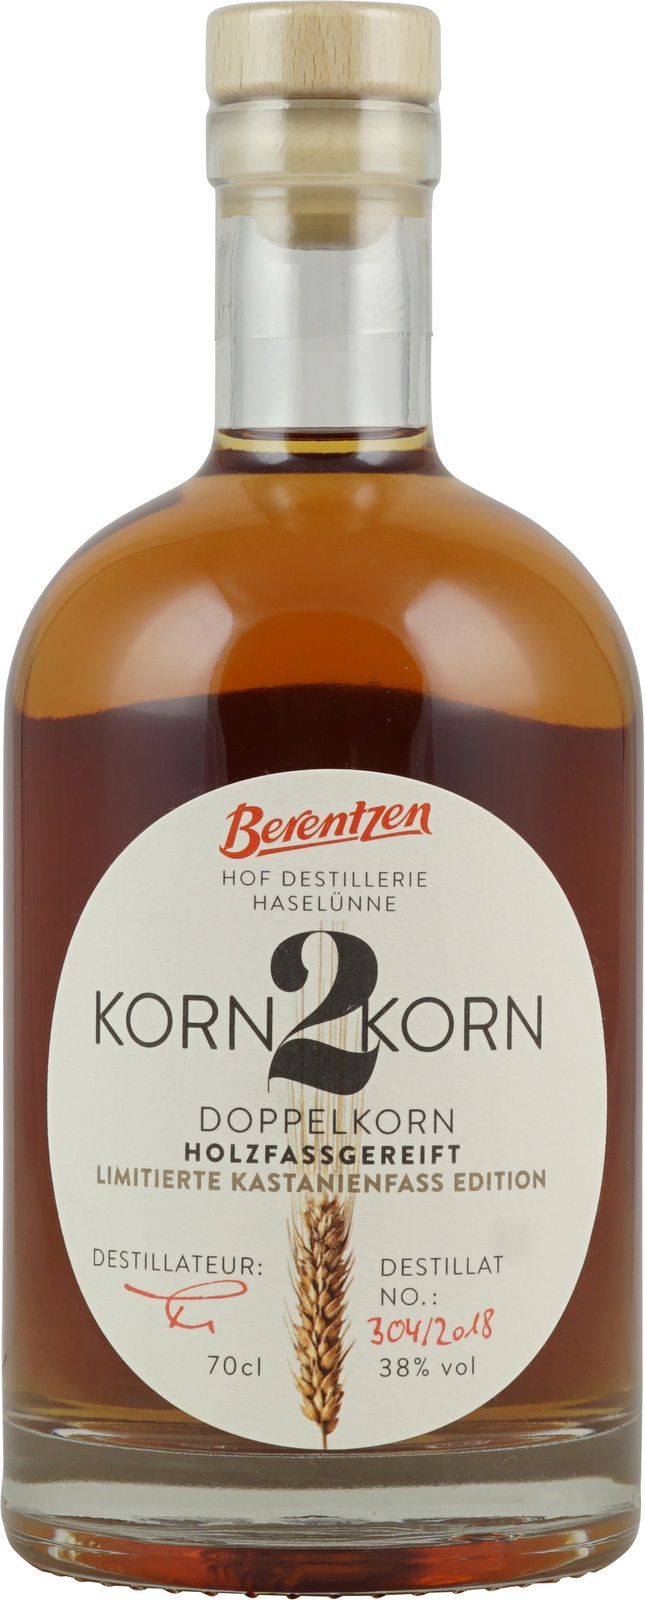 % Vol., Kastanie im Korn2Korn 0,7 38 Liter K Doppelkorn